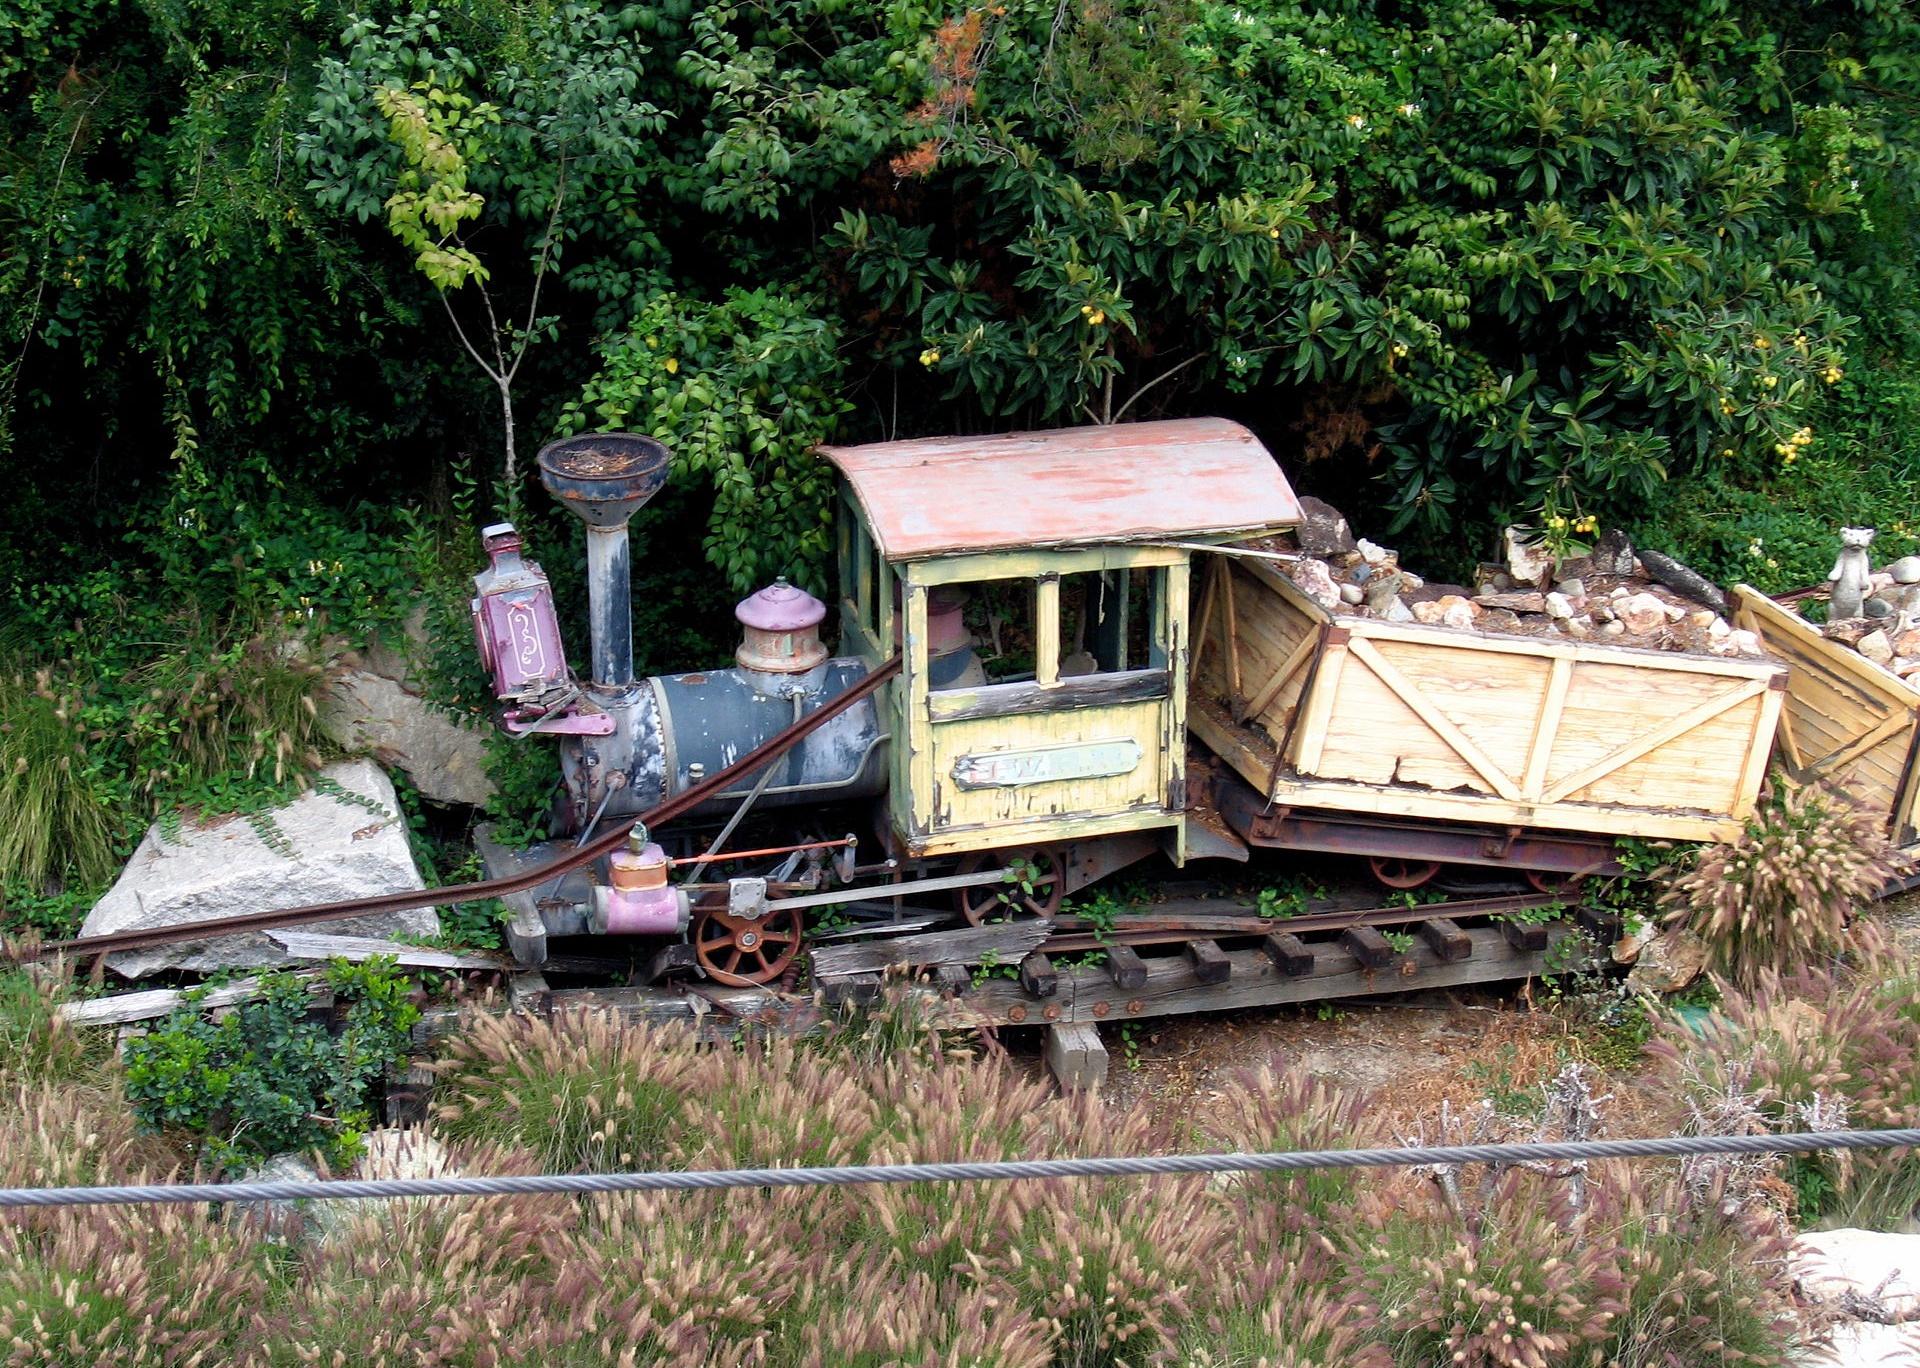 Mine Train Accessory at Disneyland